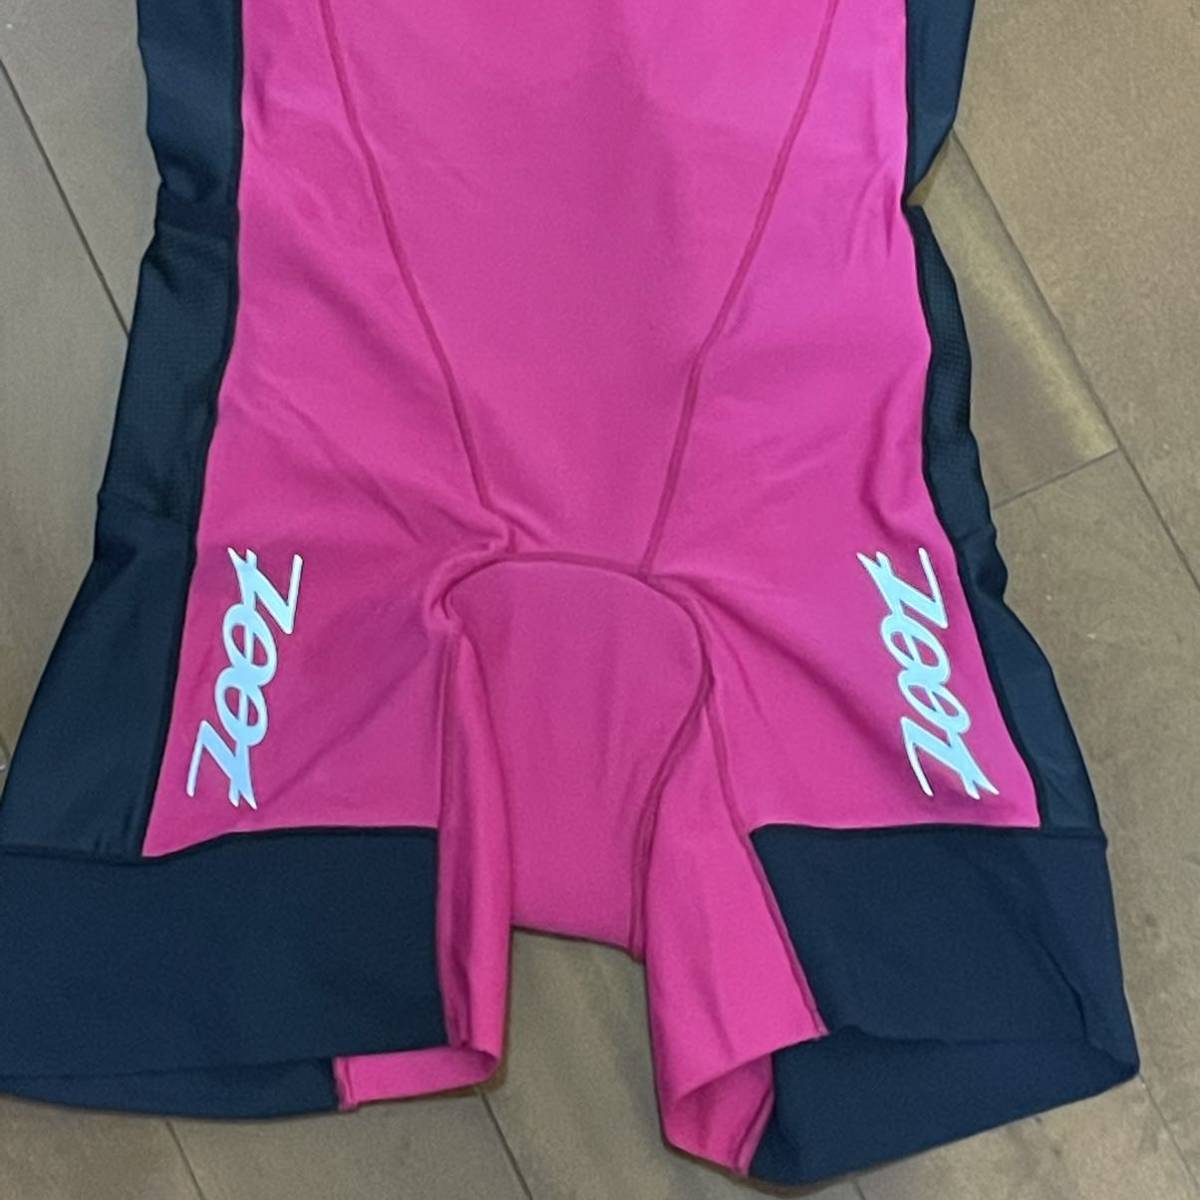  новый товар *zoot* гонки костюм *M размер * женский * триатлон * Гаваи * cycle * купальный костюм * Try костюм * плавание бег море 